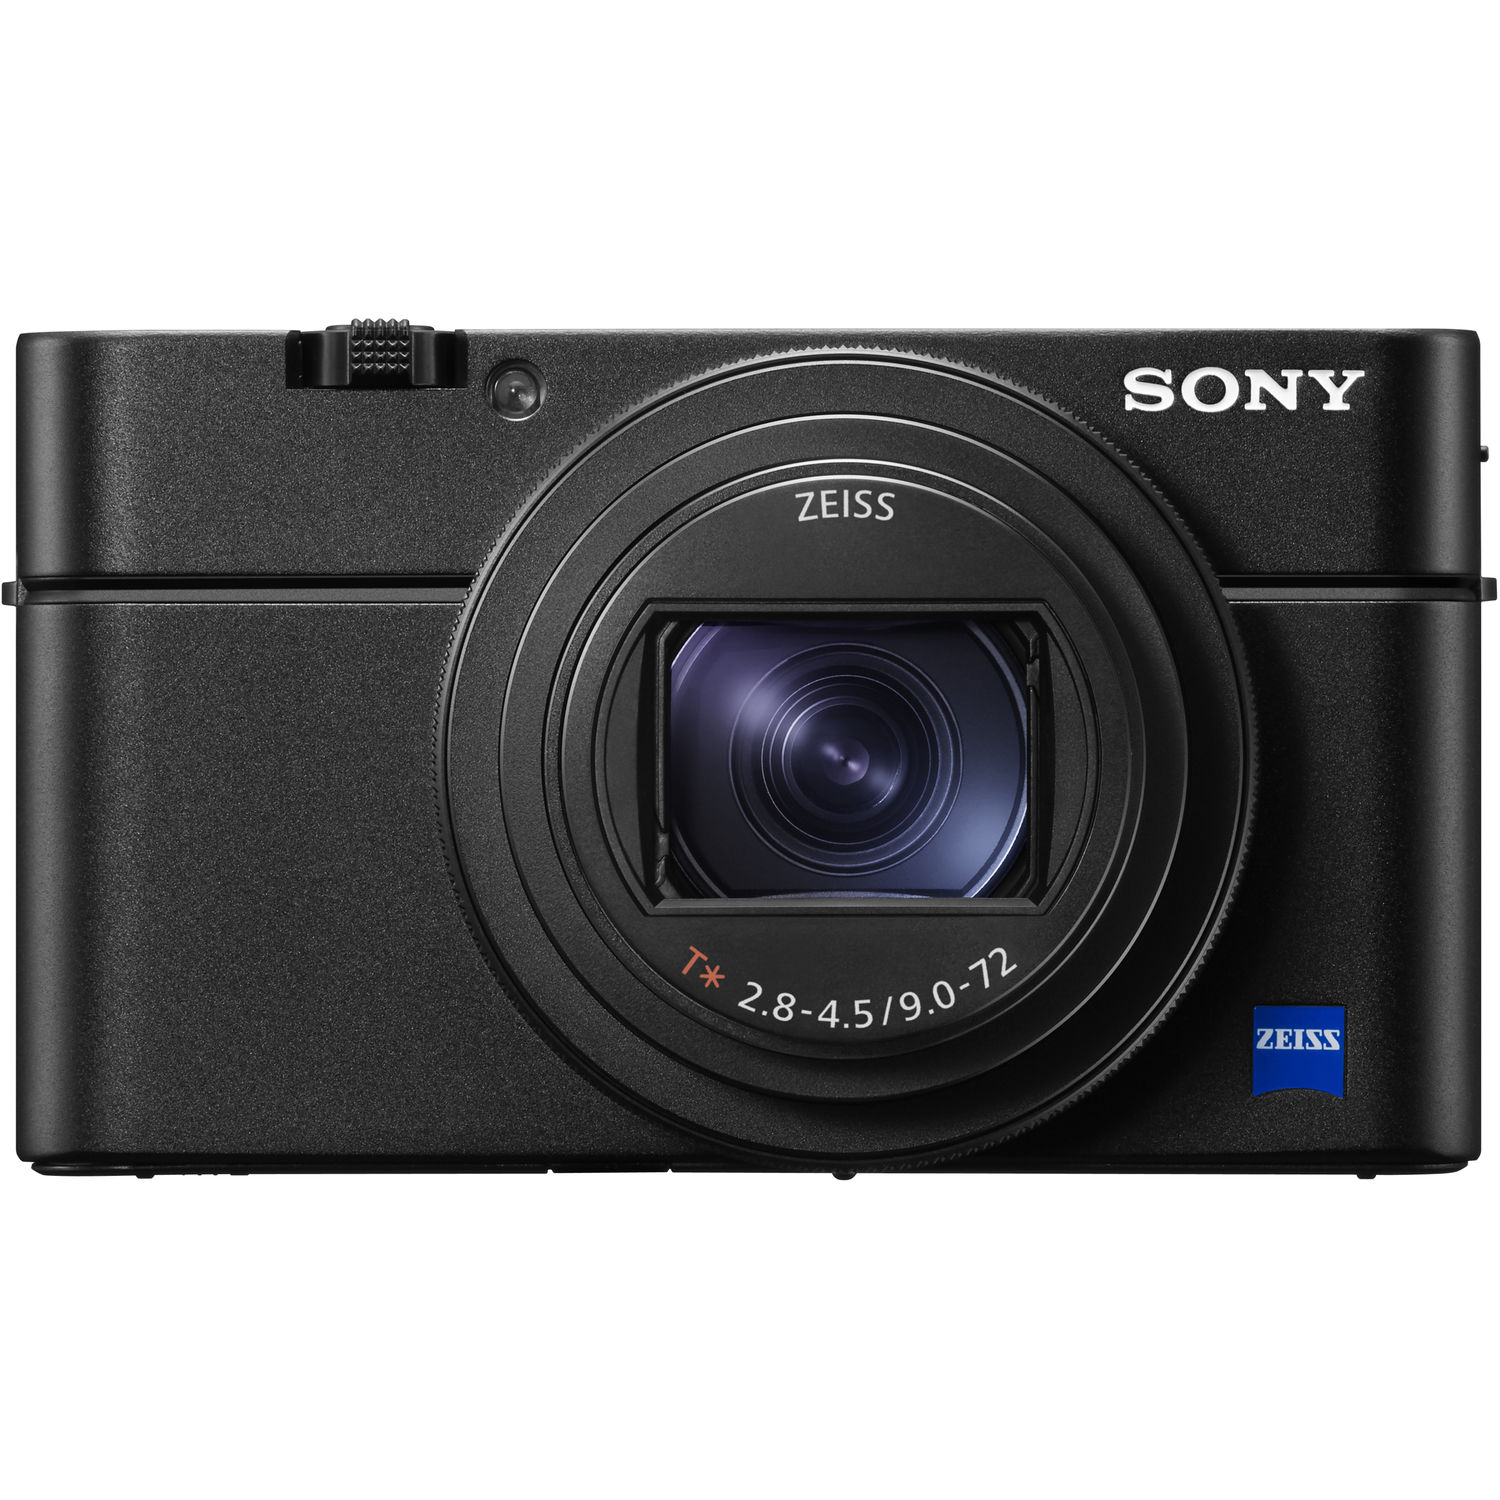 Sony DSC- RX100 VI Cyber-shot Digital Camera